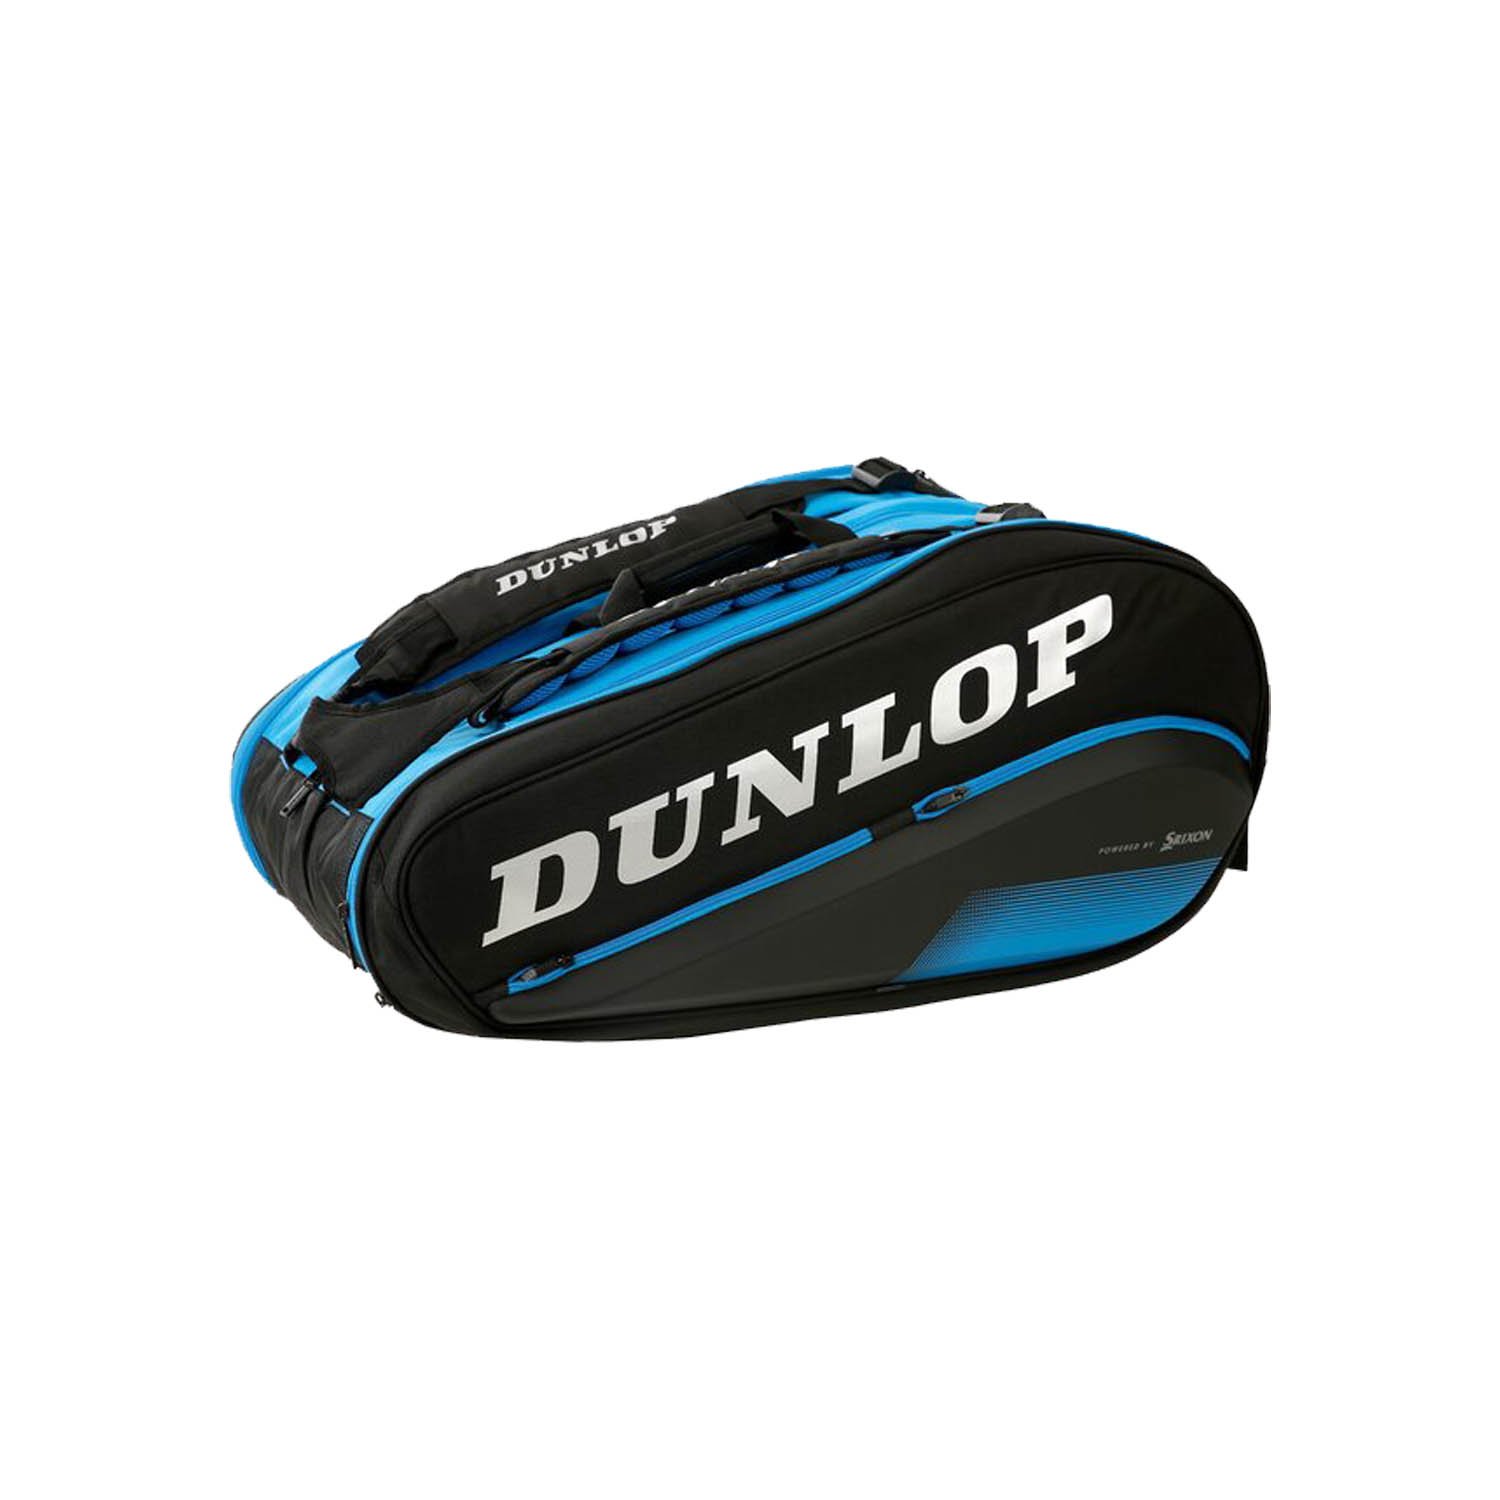 Dunlop FX Performance Thermo X12 Tenis Raketi Çantası - Siyah - 1